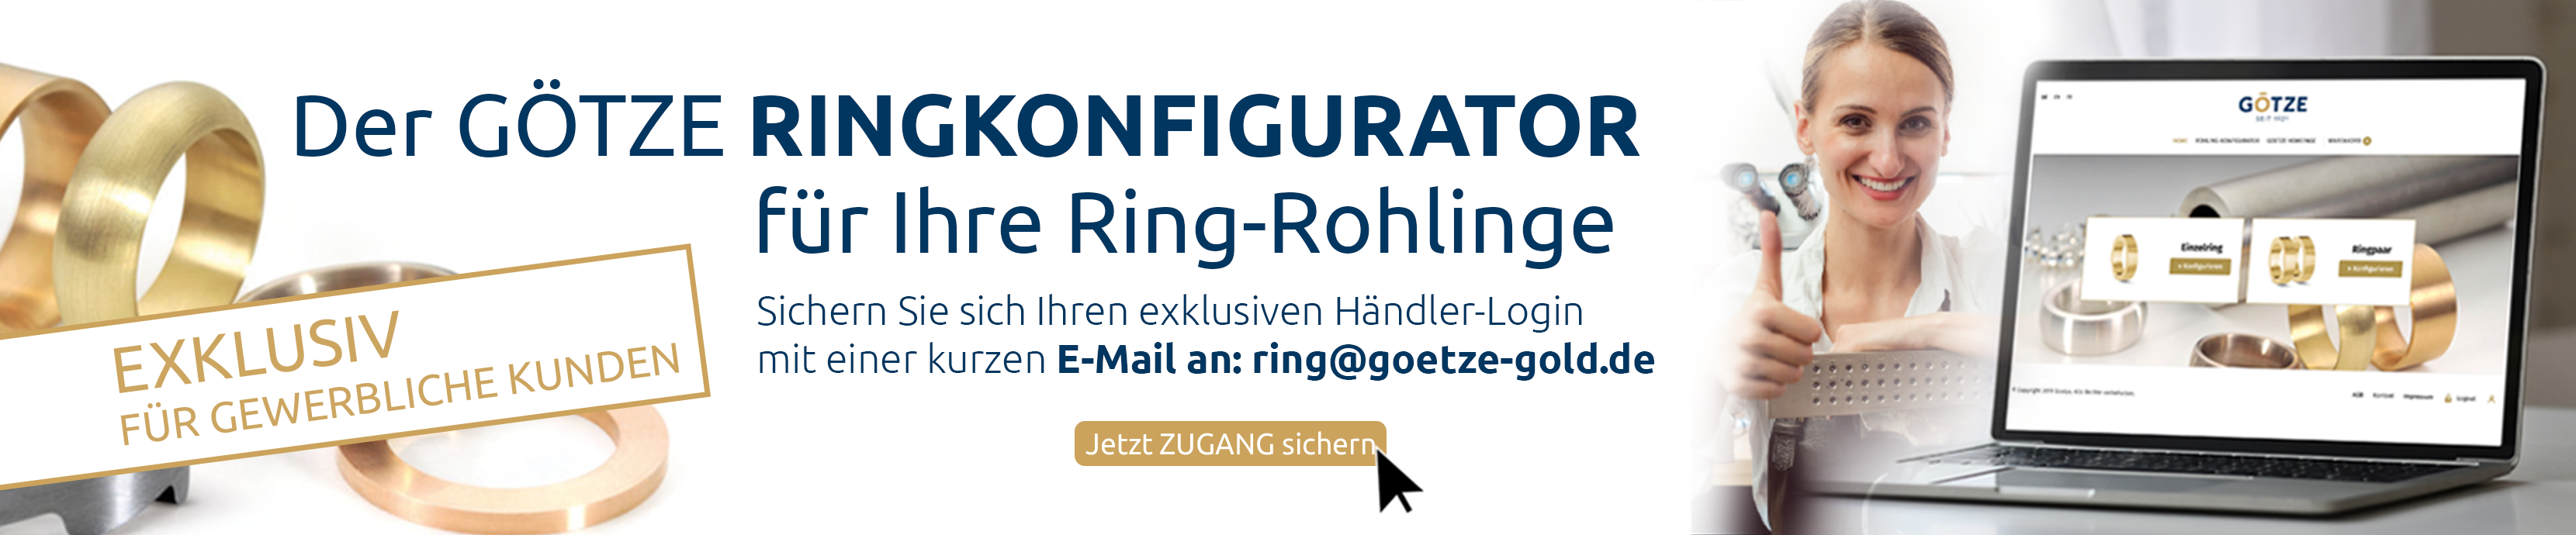 Ringkonfigurator